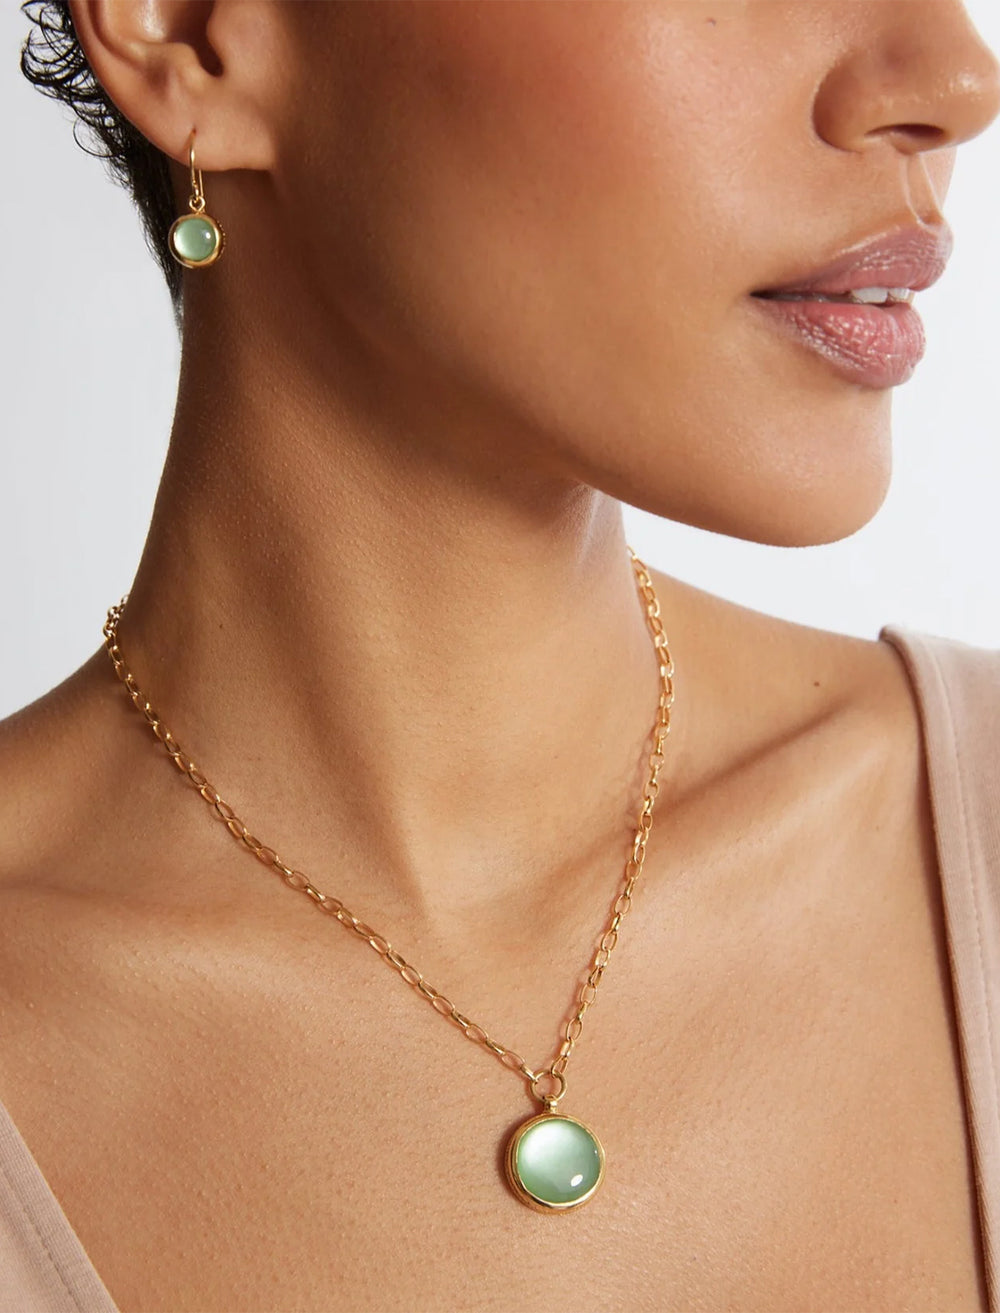 Model wearing Anna Beck's green quartz drop earrings in gold.